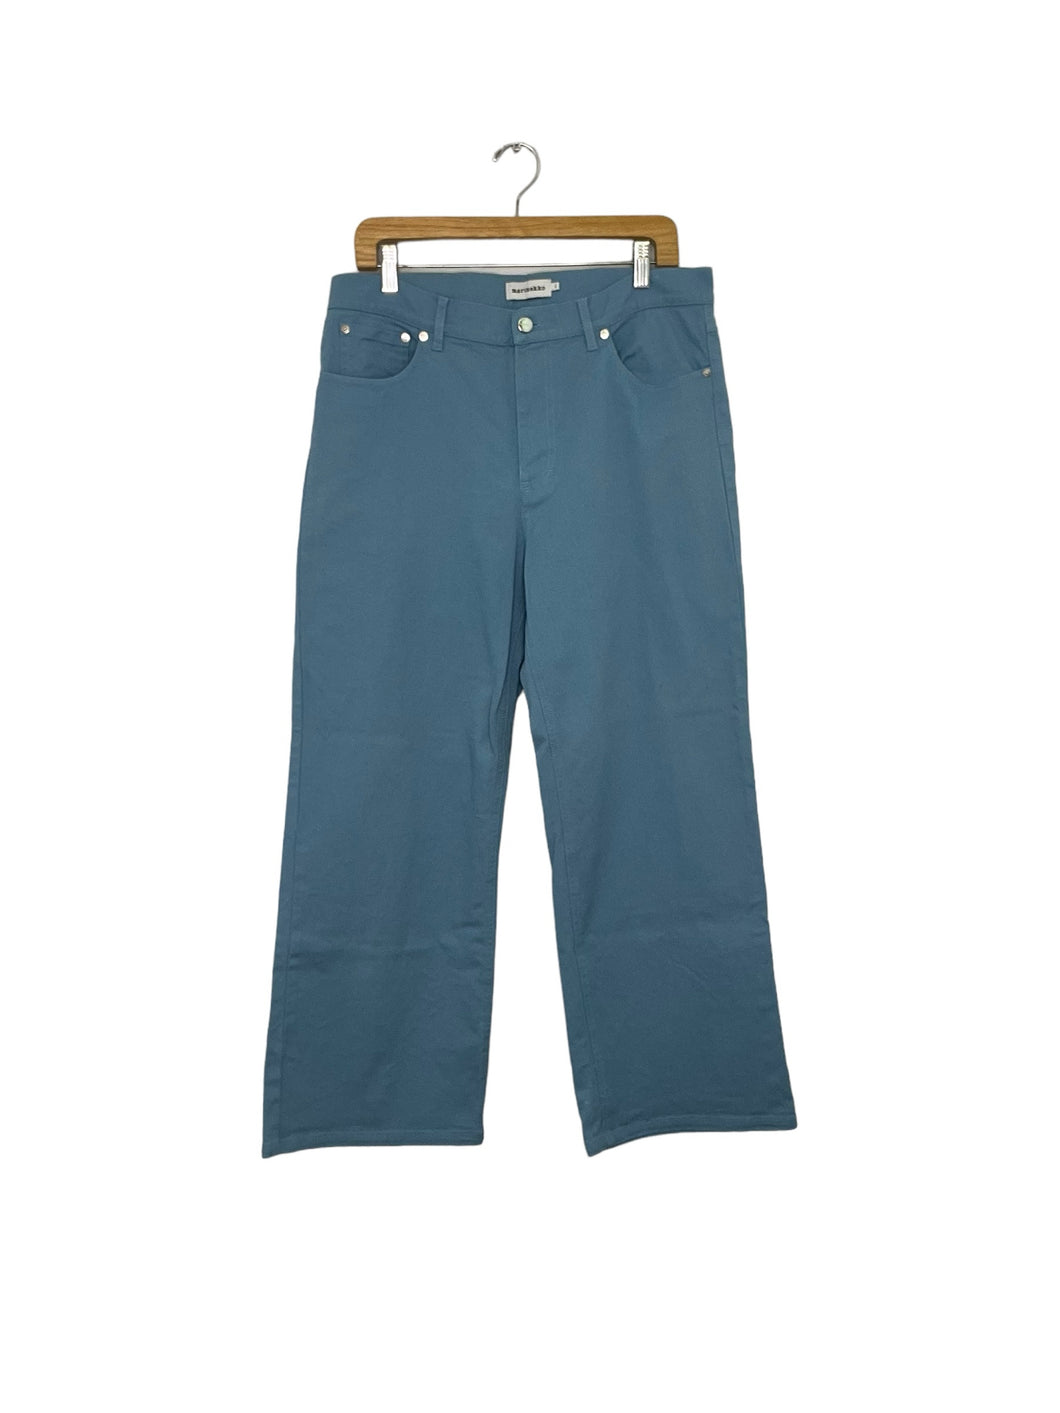 Marimekko Size 14 Lt. Blue Jeans- Ladies